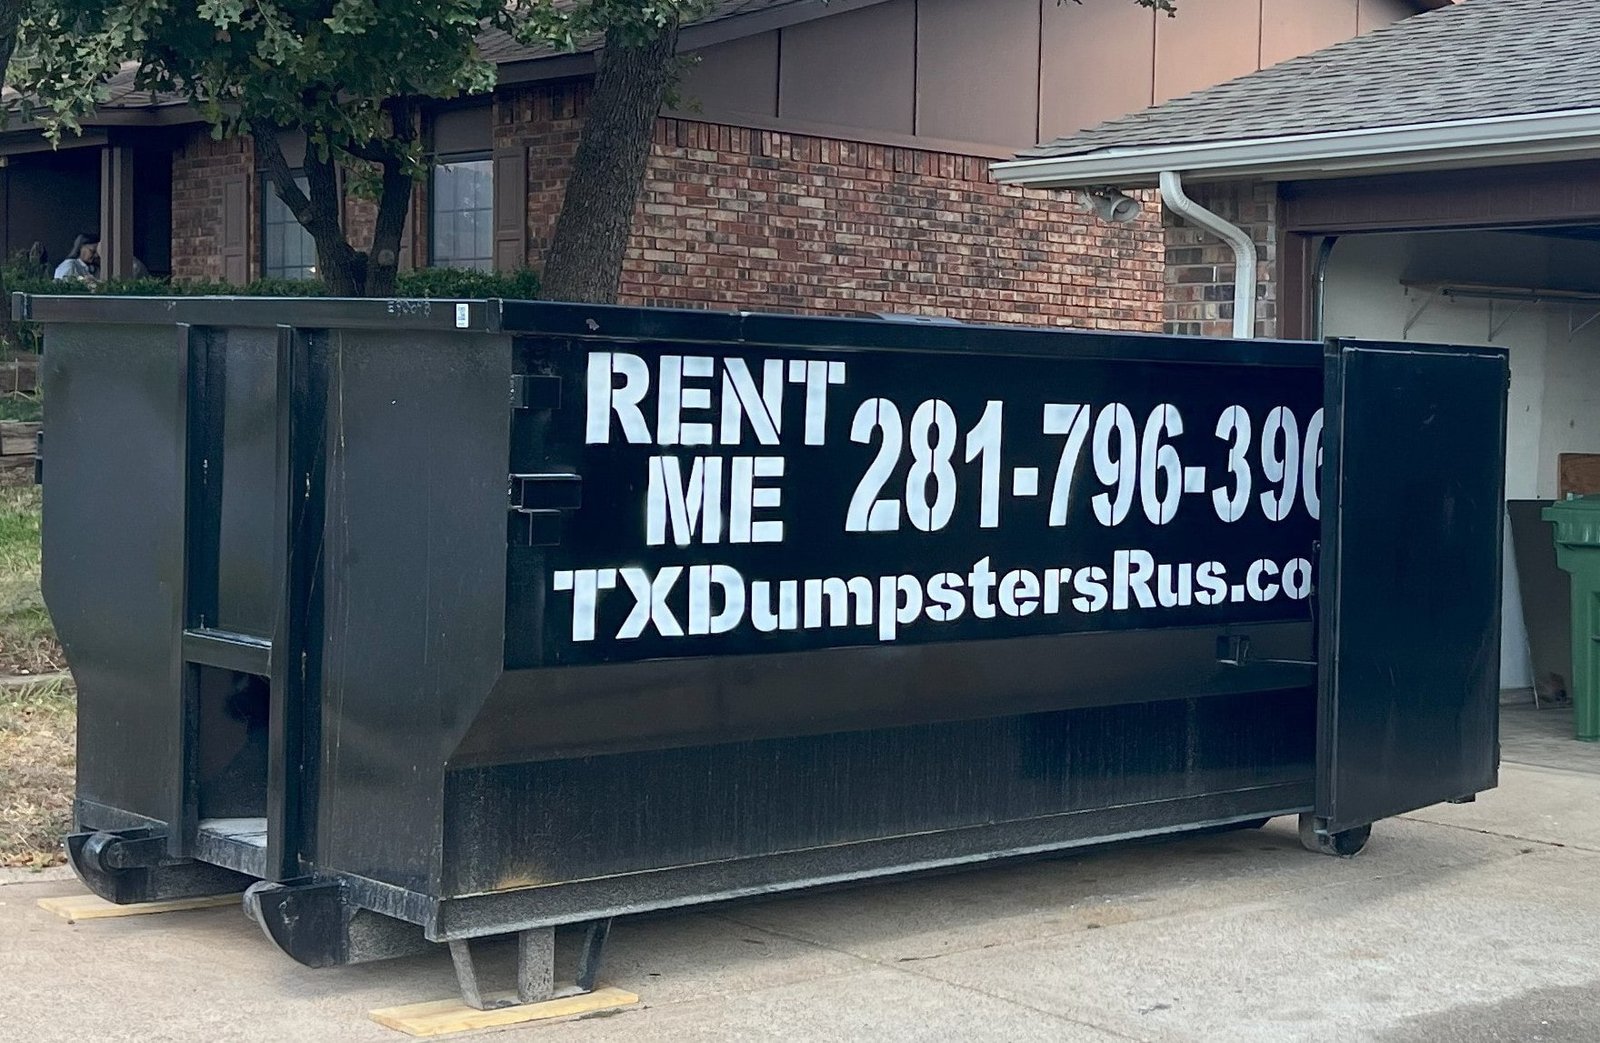 Remodeling dumpster rental in Dallas, TX